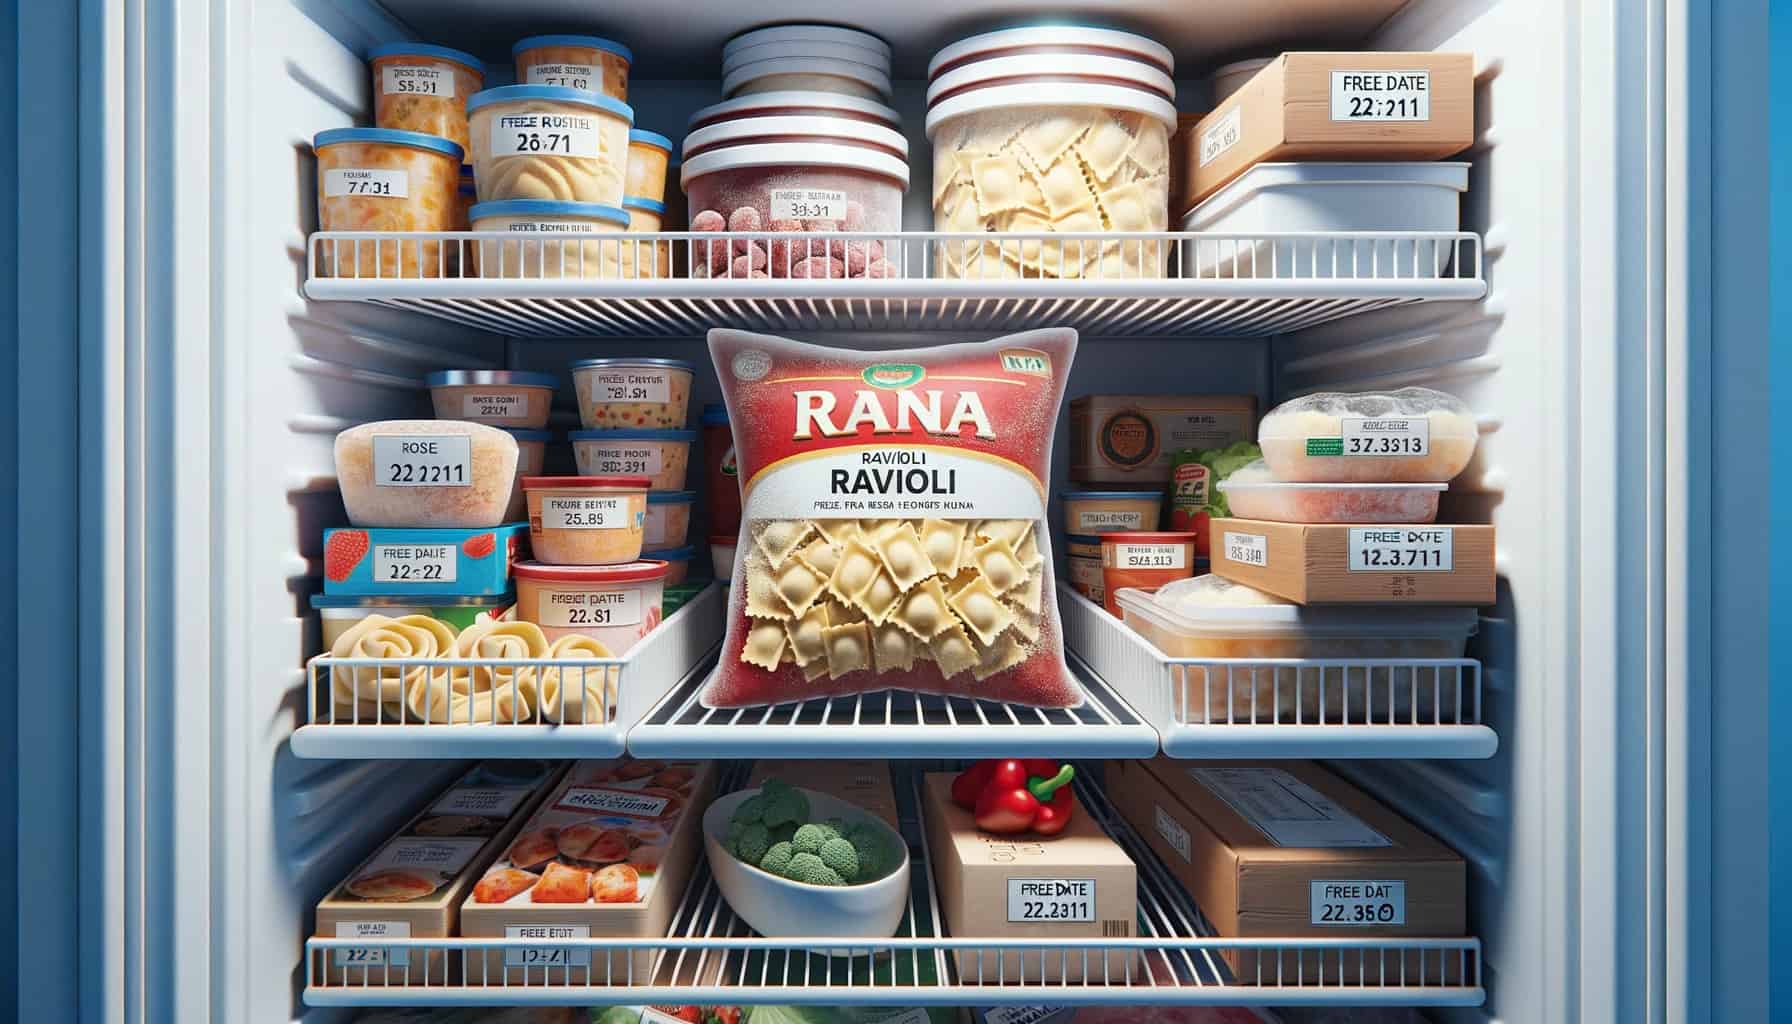 Can you freeze rana ravioli